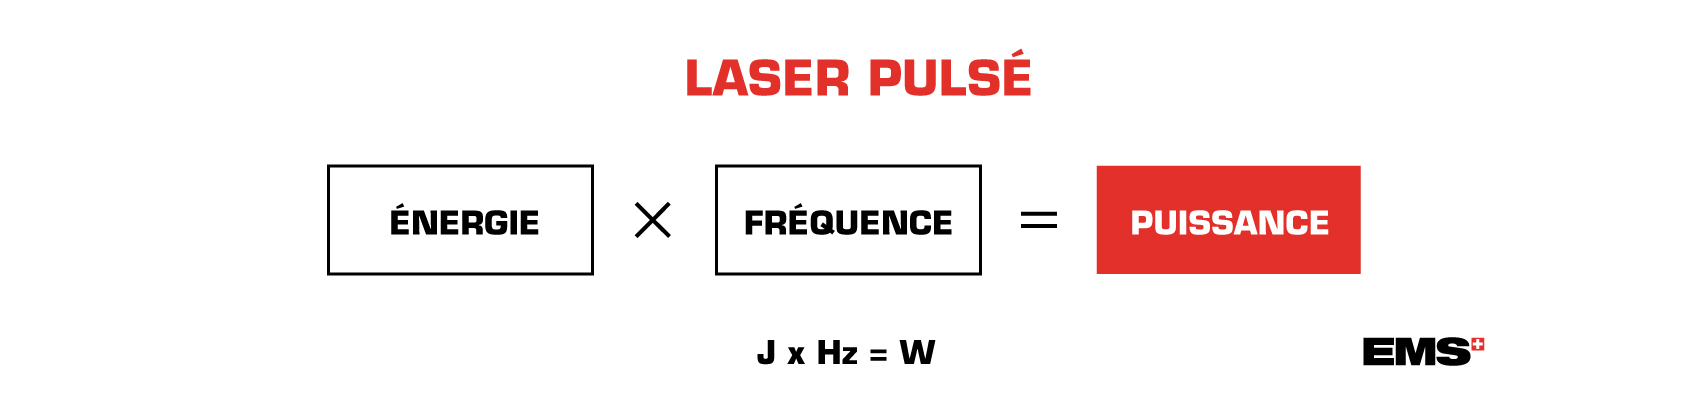 pulsed laser